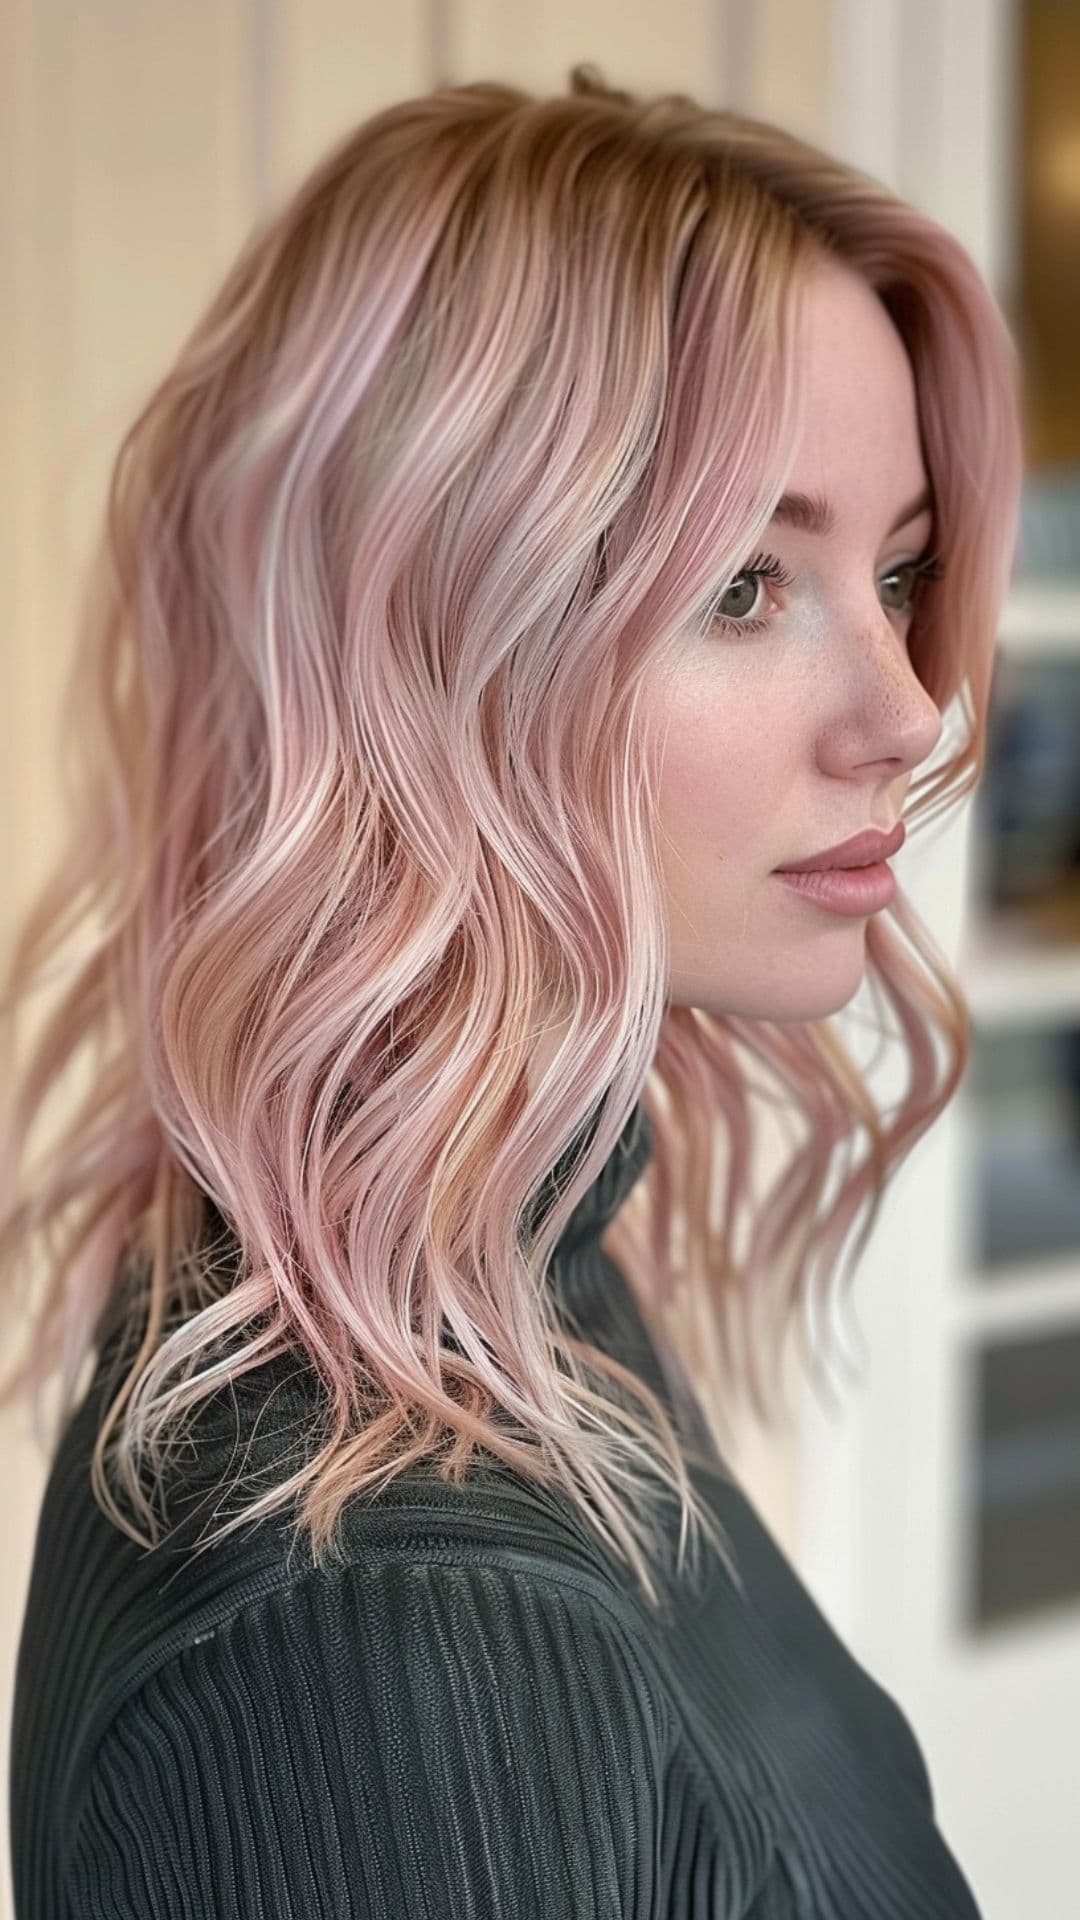 A woman modelling a pastel pink hair.